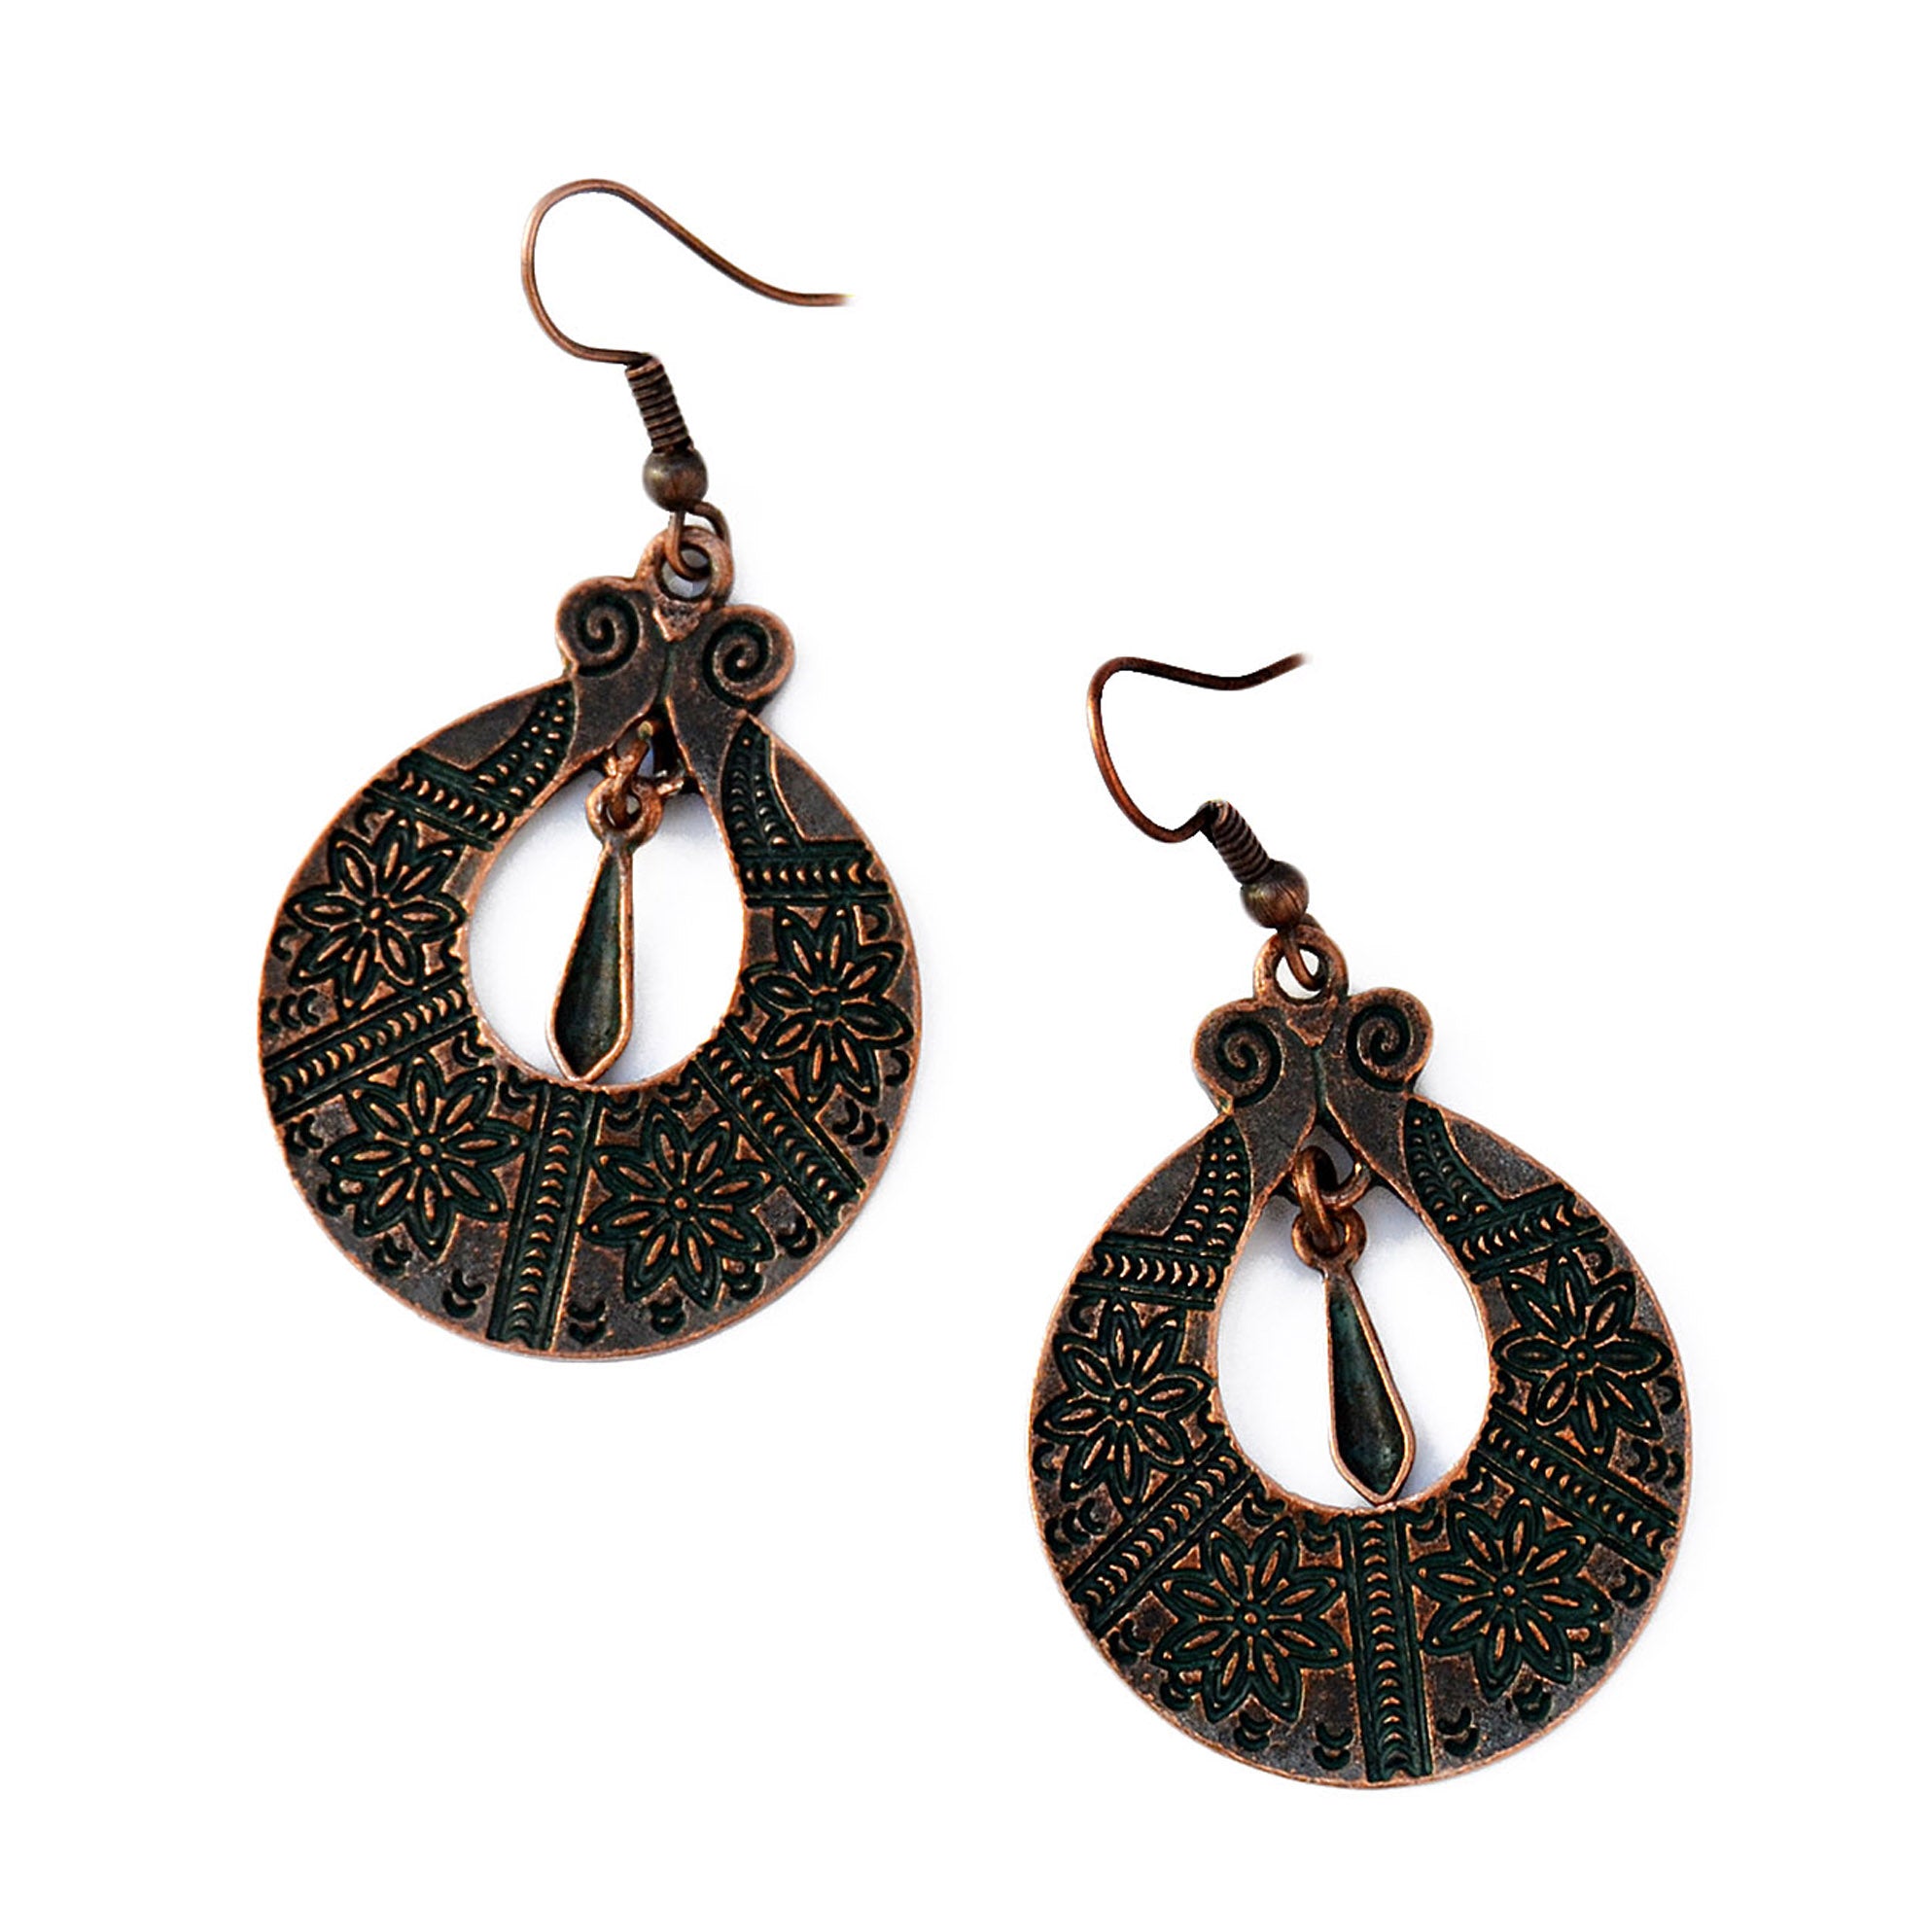 Green copper hoop earrings